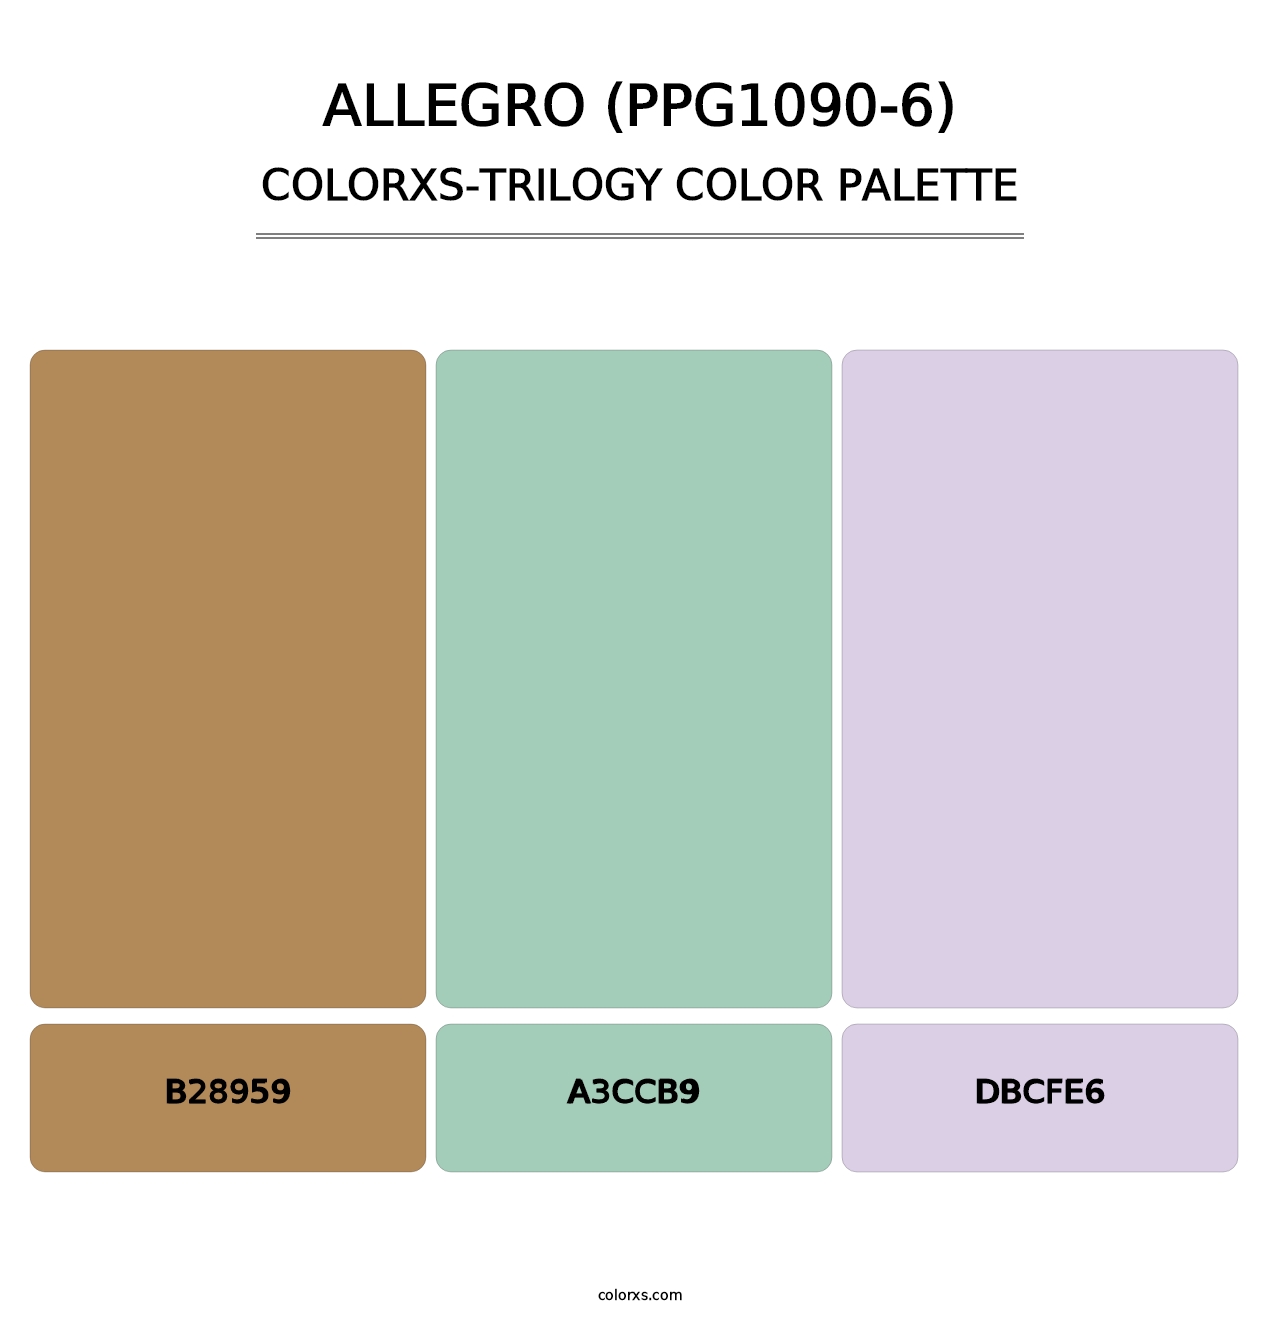 Allegro (PPG1090-6) - Colorxs Trilogy Palette